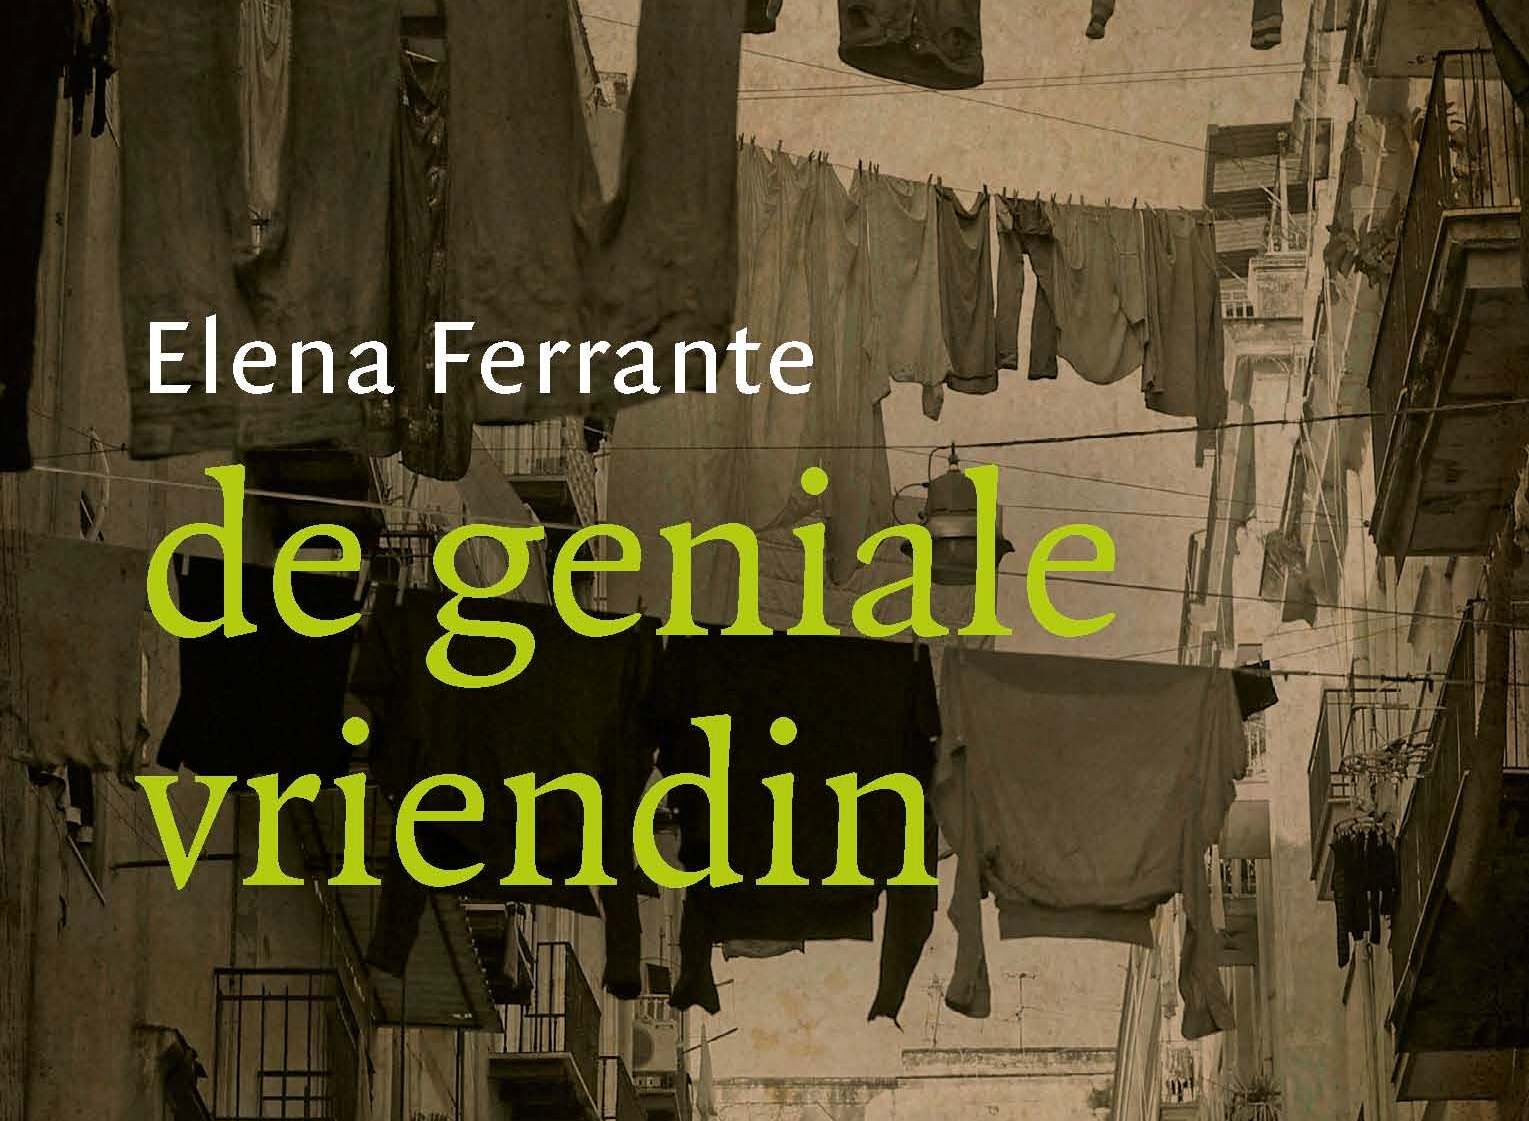 De geniale vriendin van Elena Ferrante